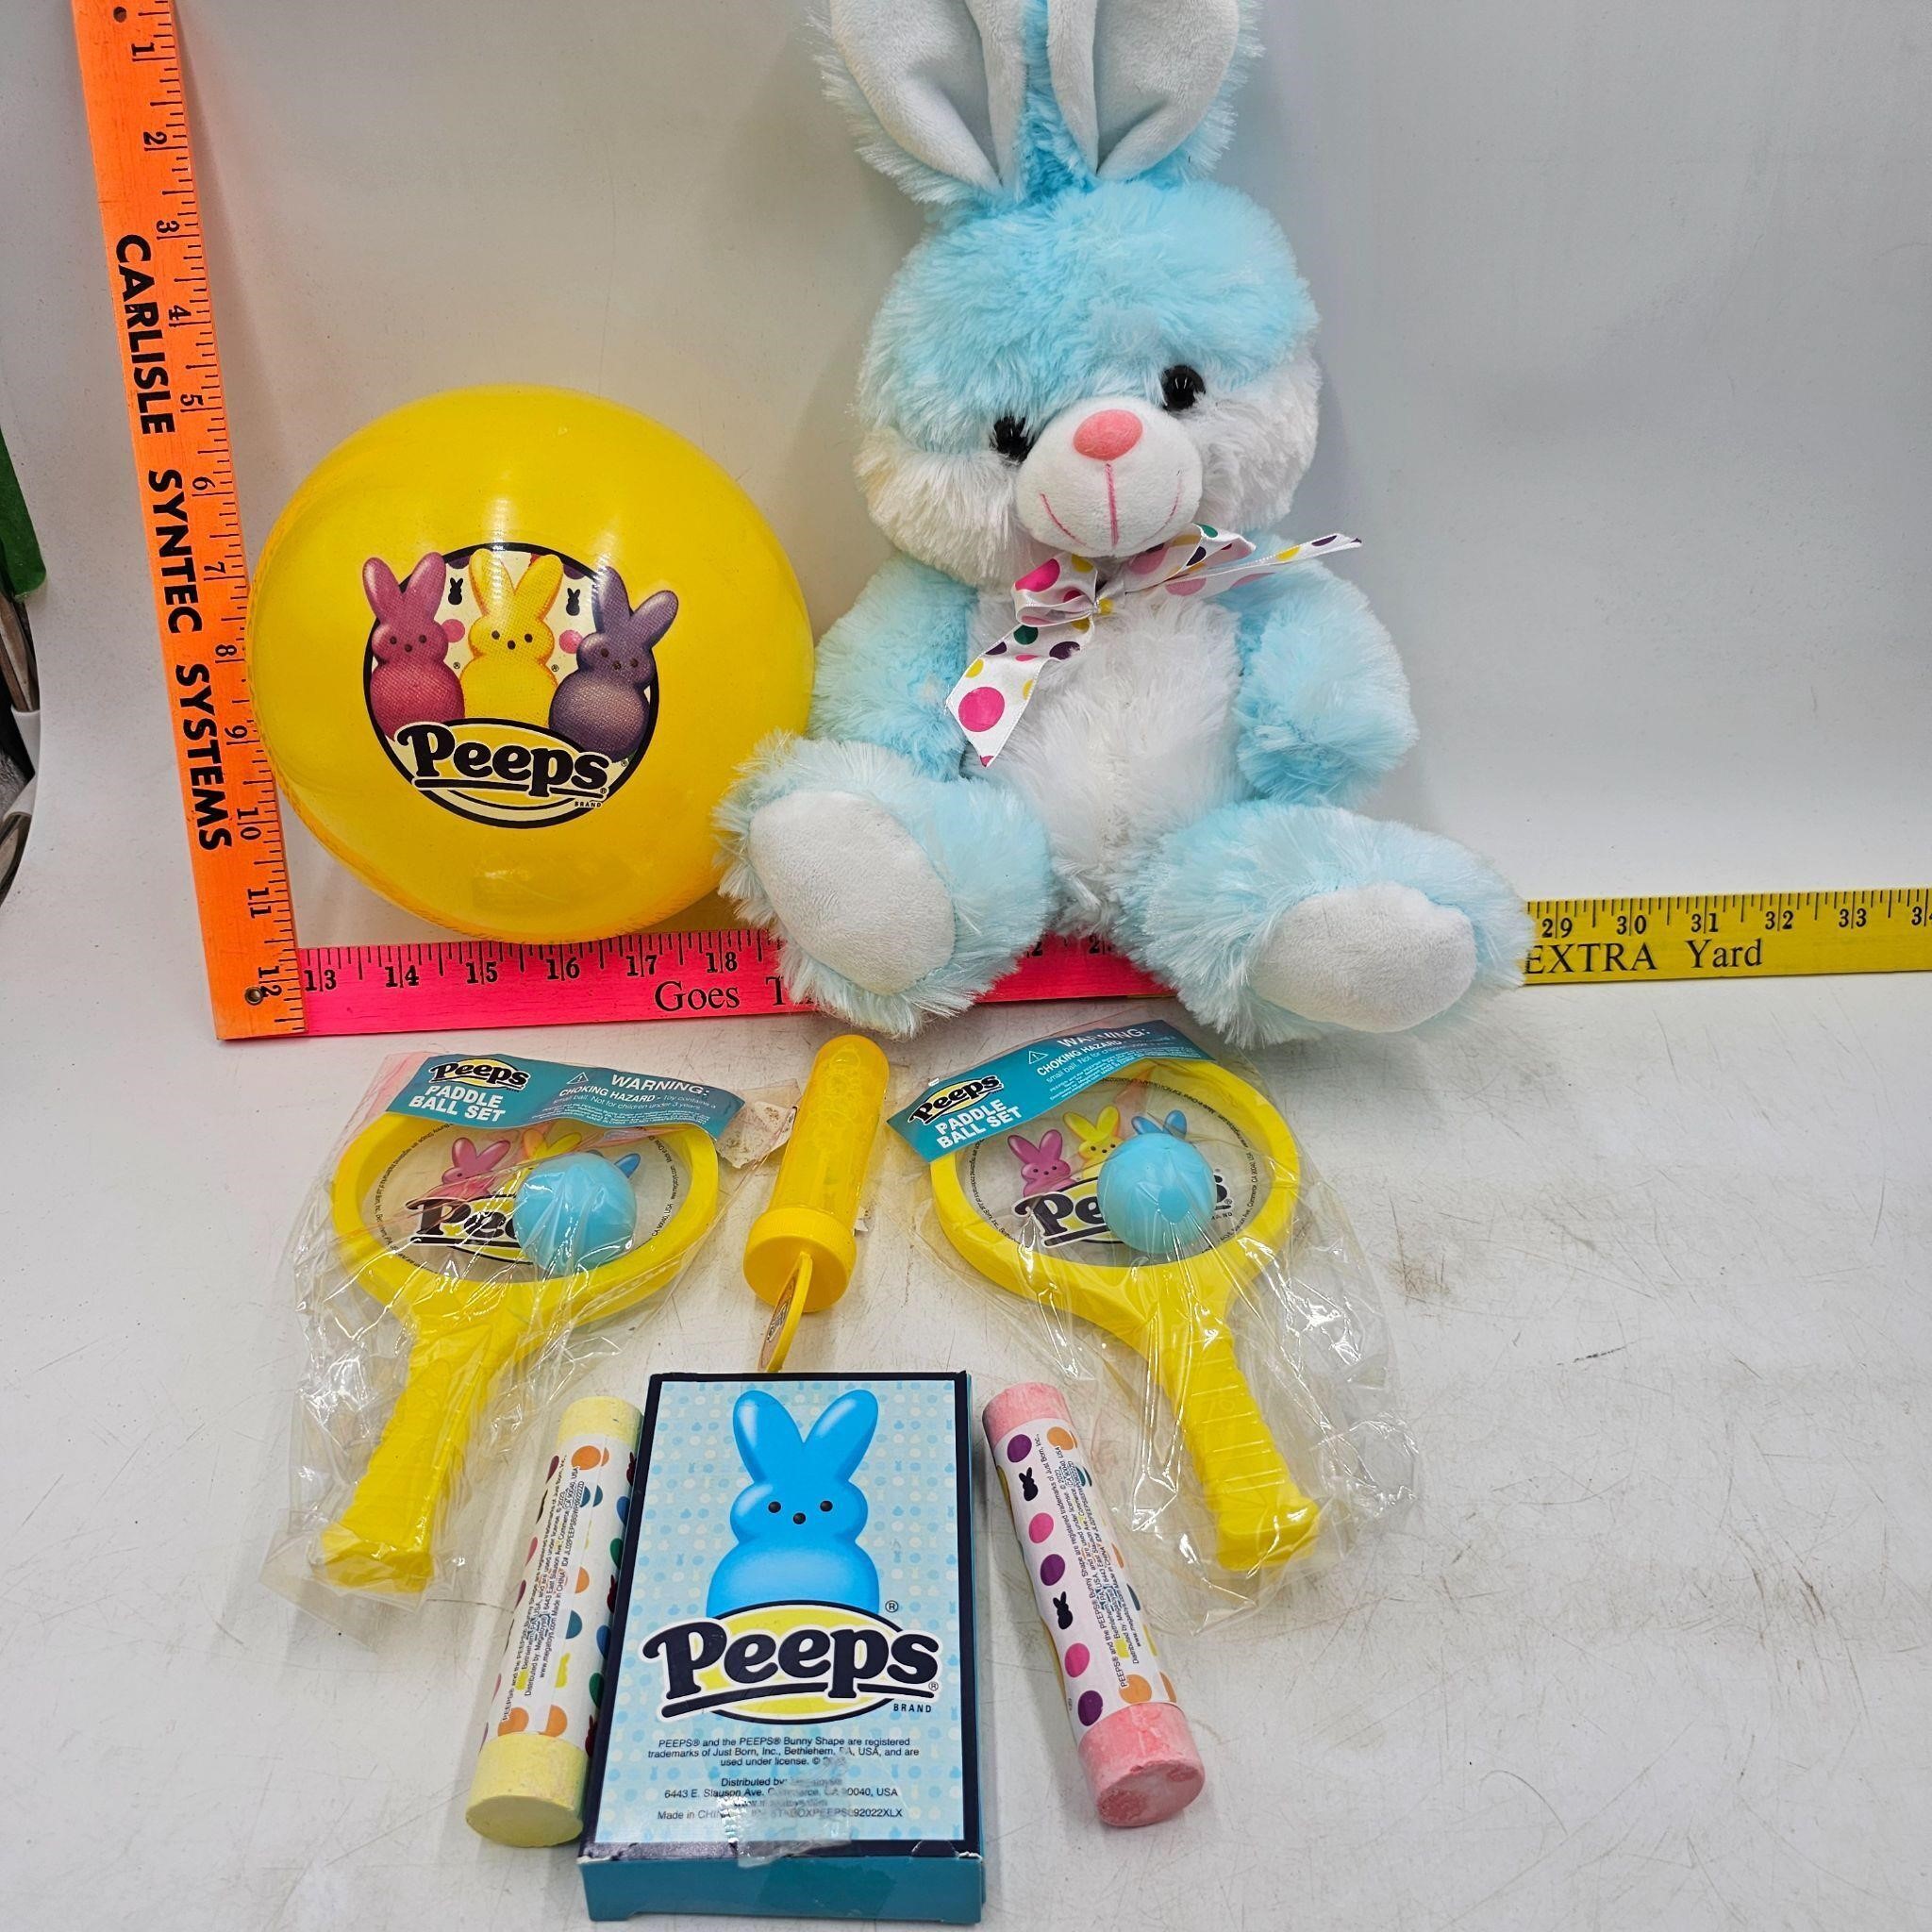 Peeps Toys with Stuffed Rabbit